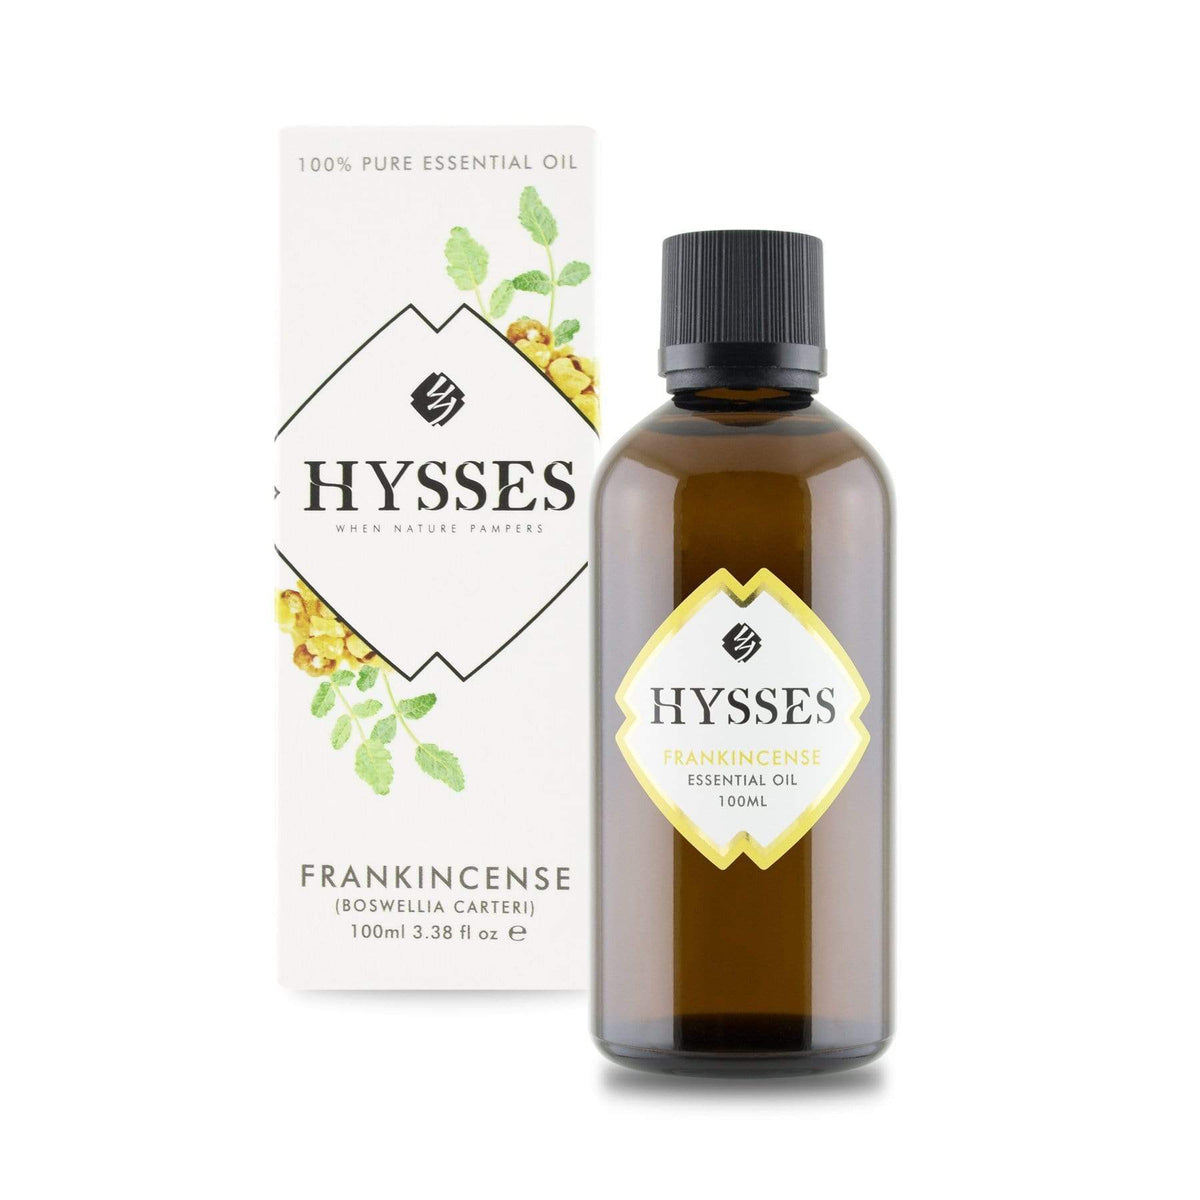 Hysses Essential Oil 100ml Essential Oil Frankincense